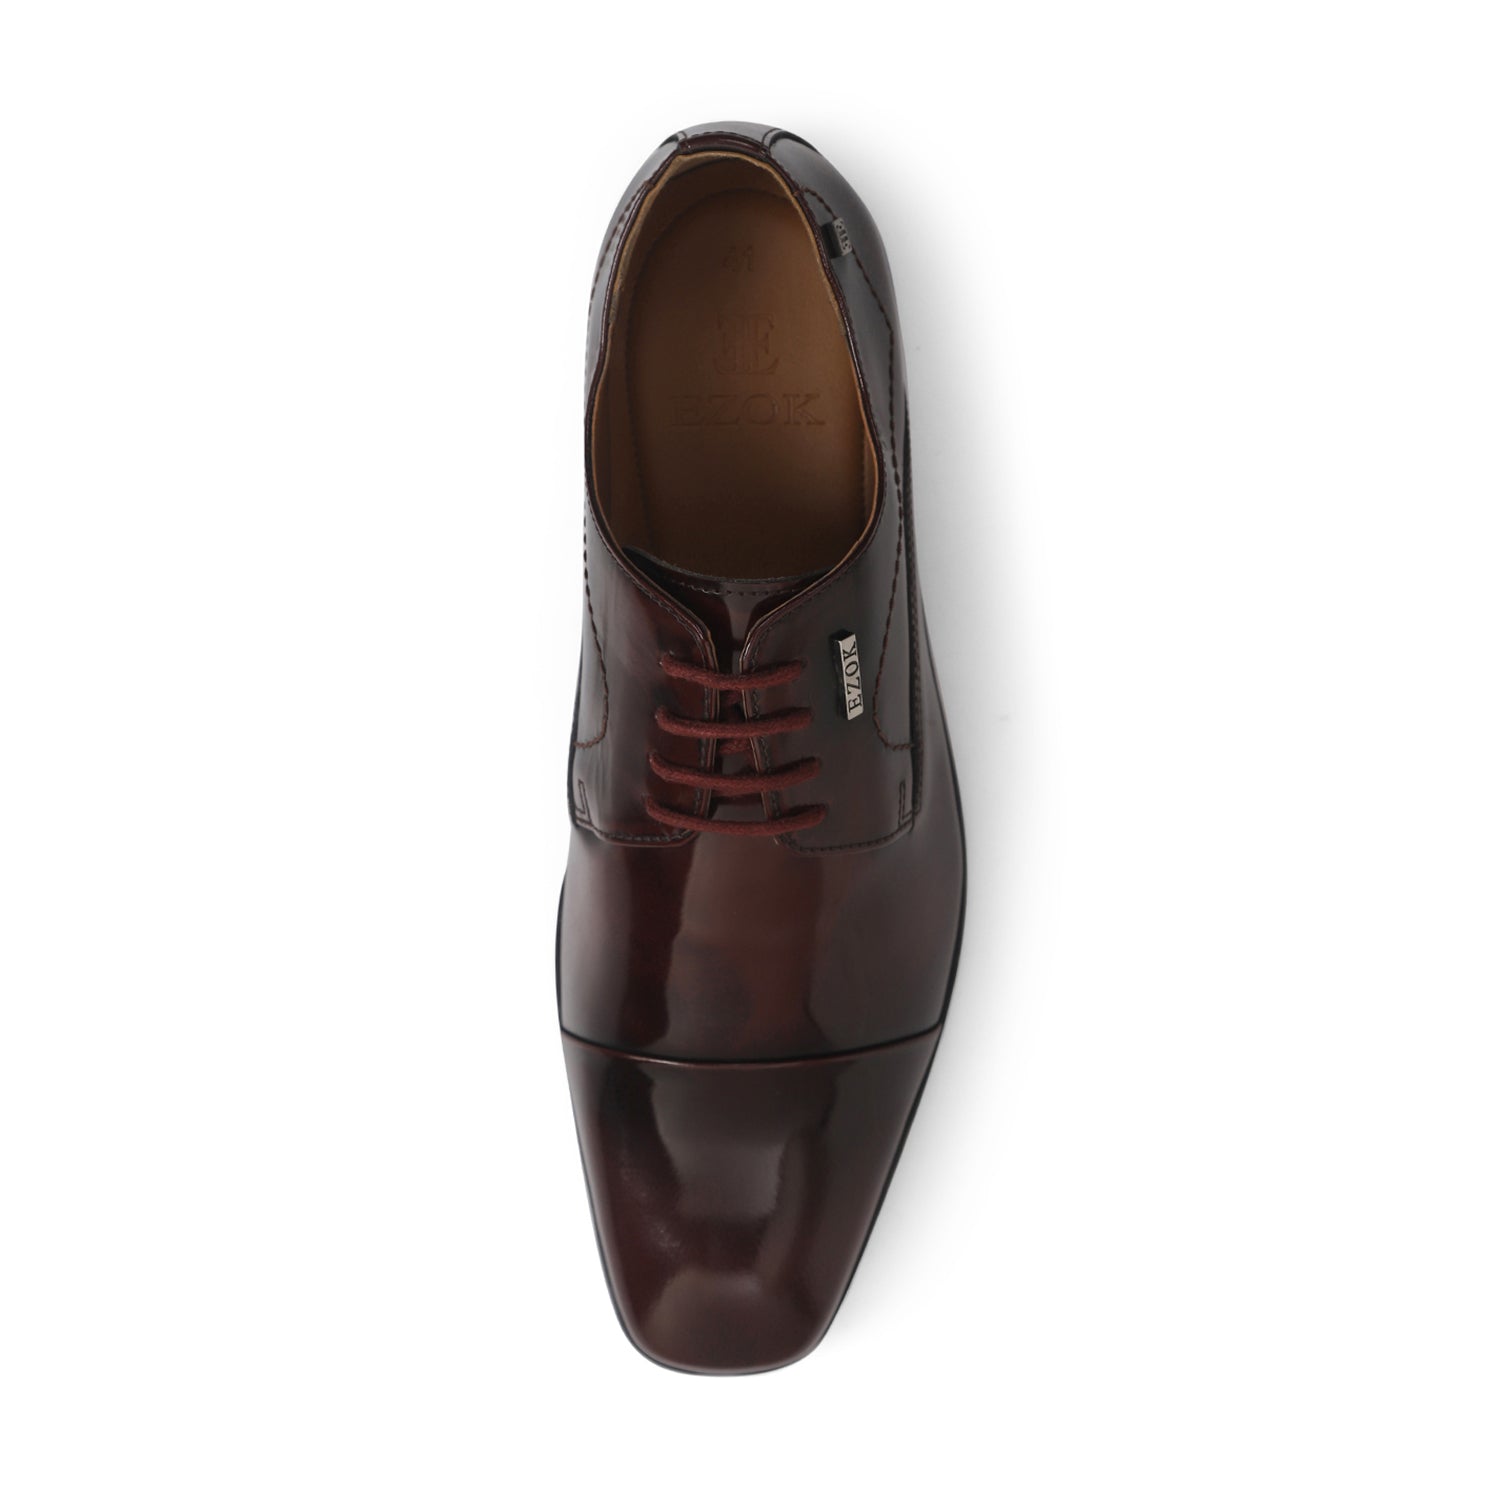 Ezok Brown Formal Cap Toe Leather Derby Shoes